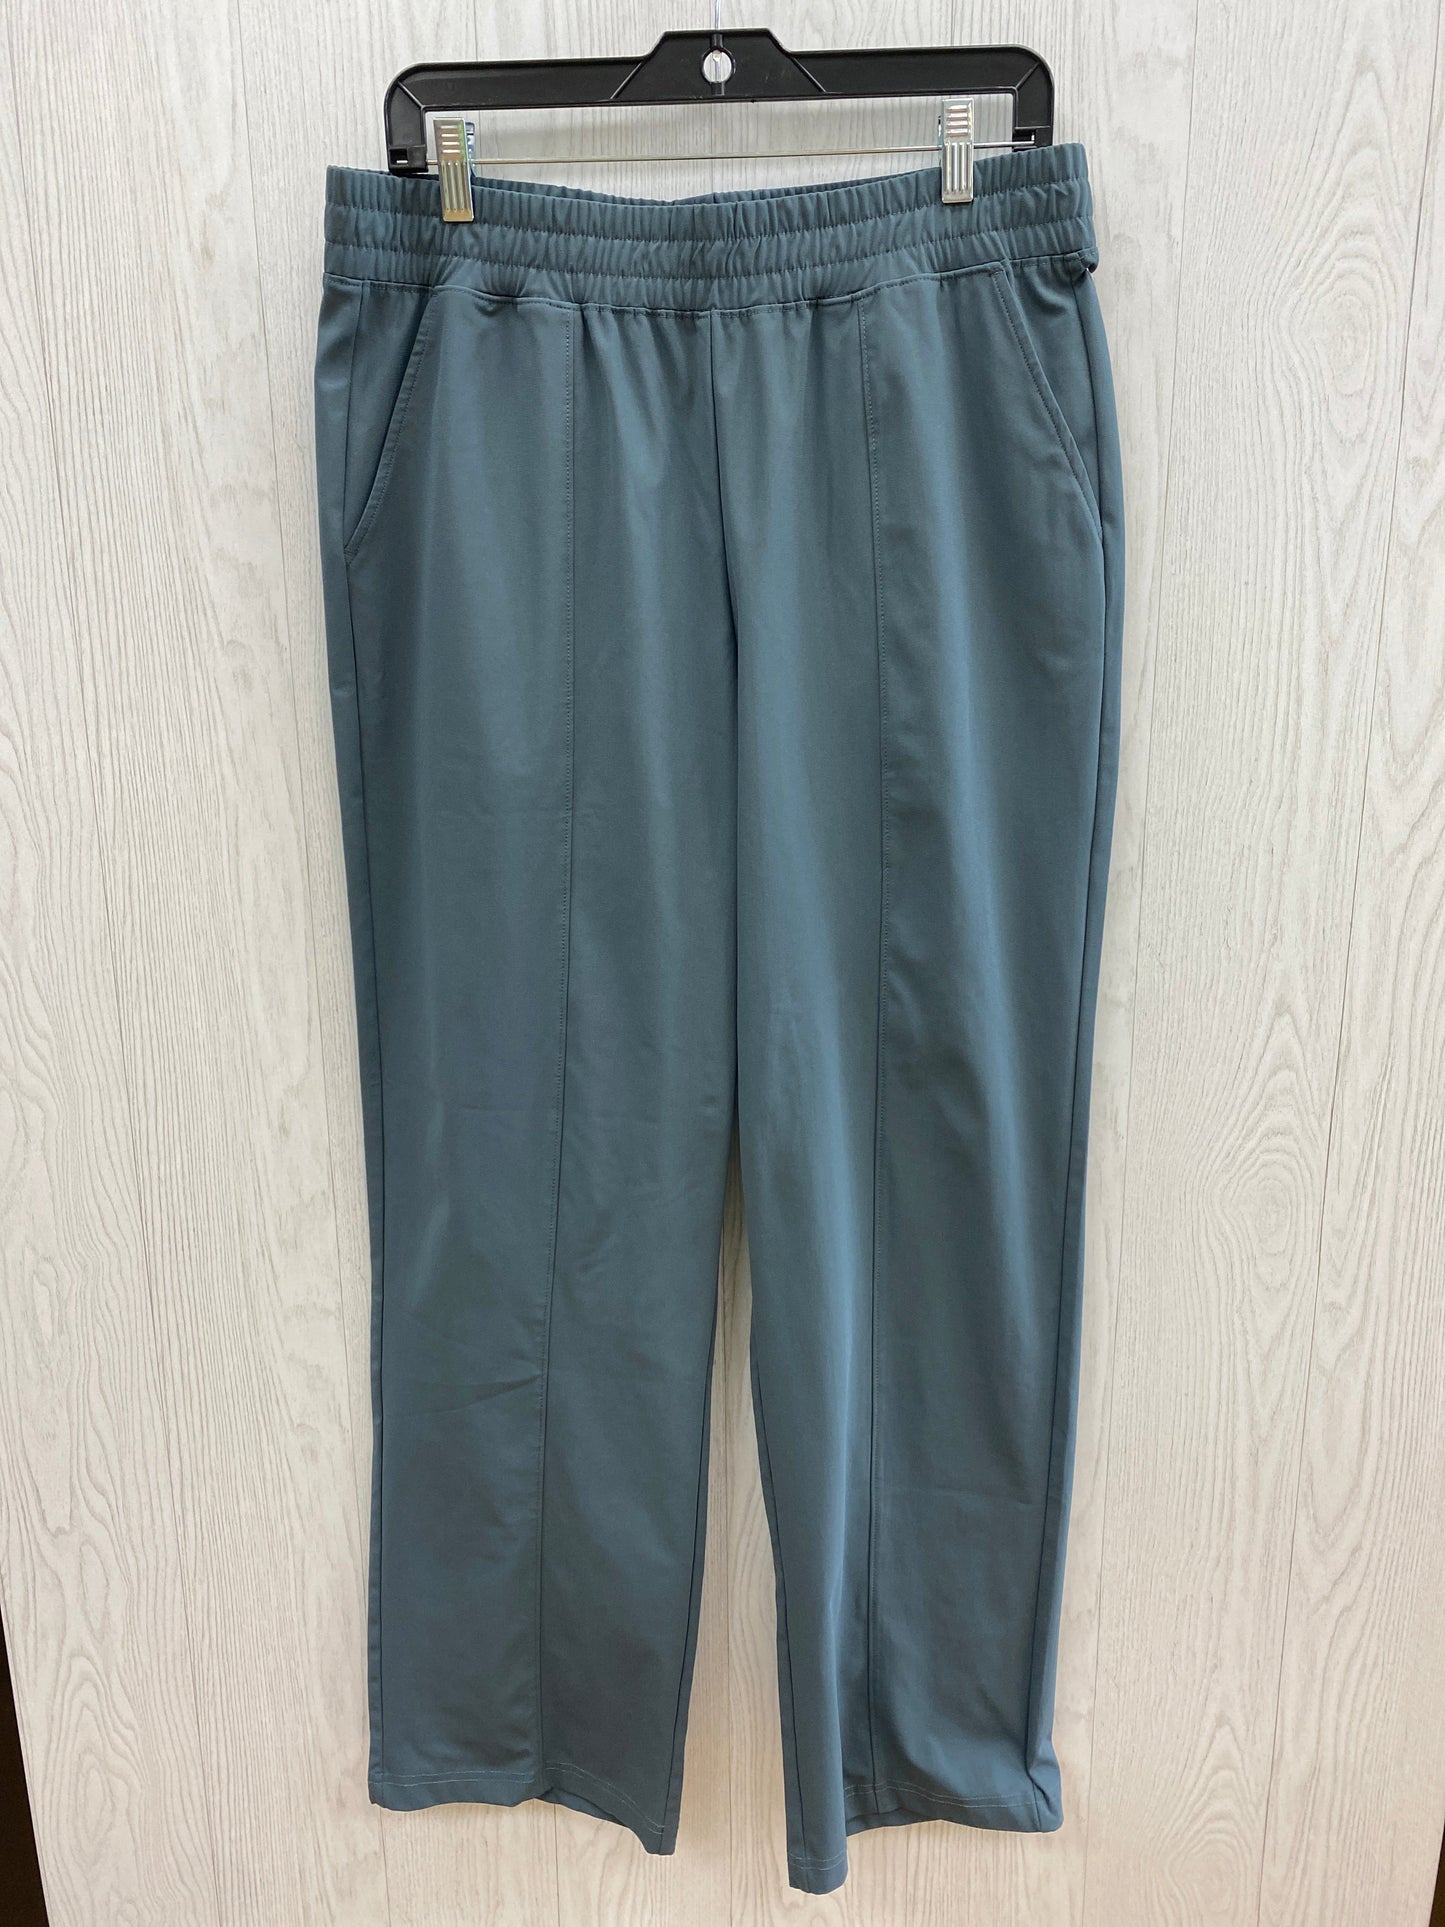 Grey Athletic Pants Mondetta, Size L